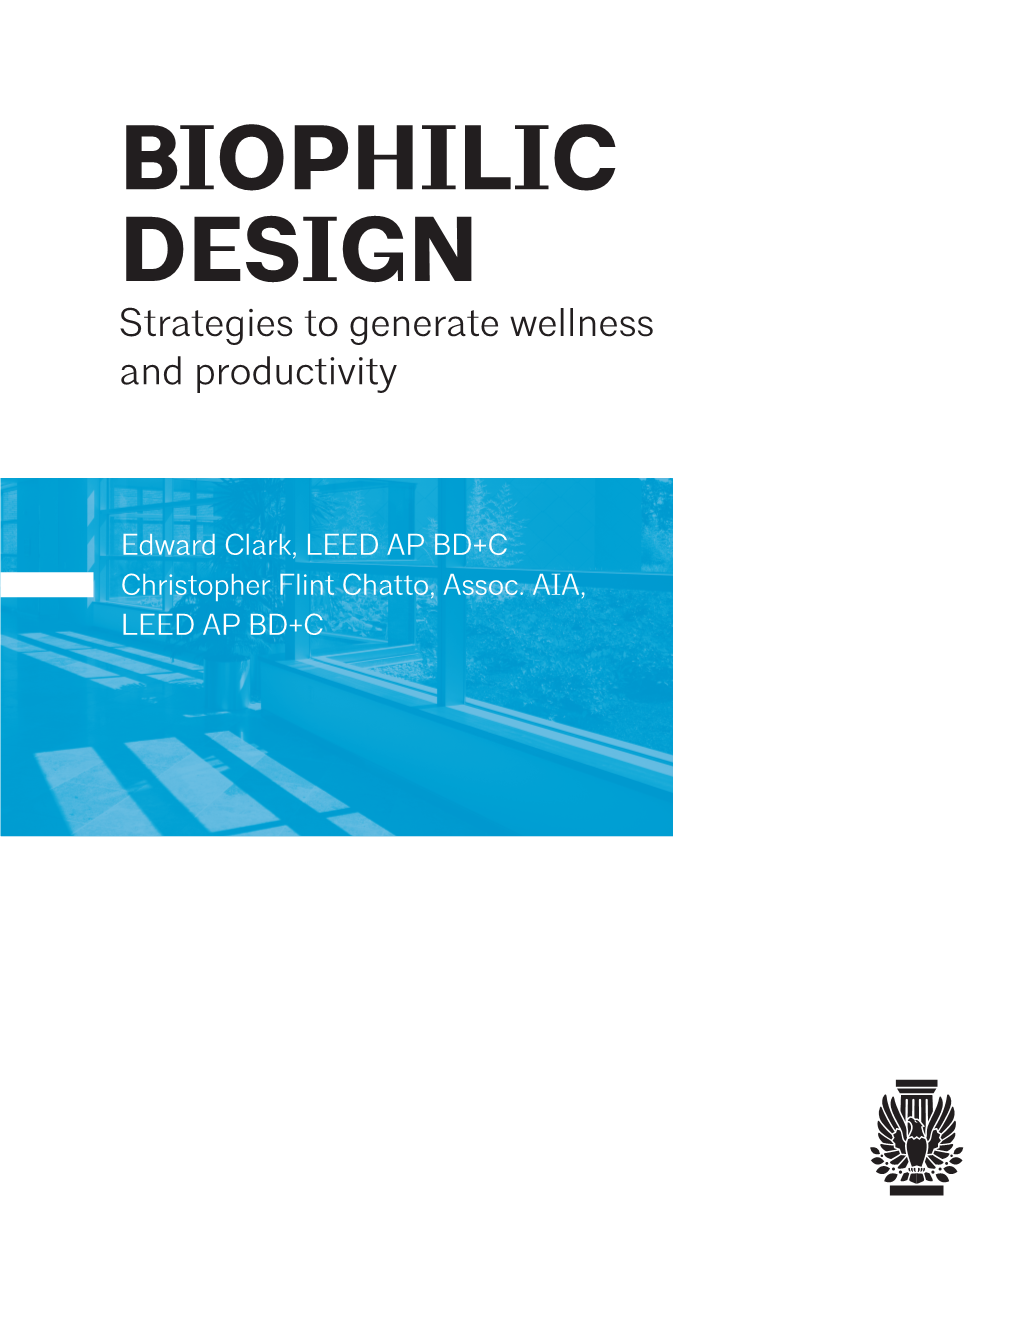 Biophilic Design Strategies to Generate Wellness and Productivity